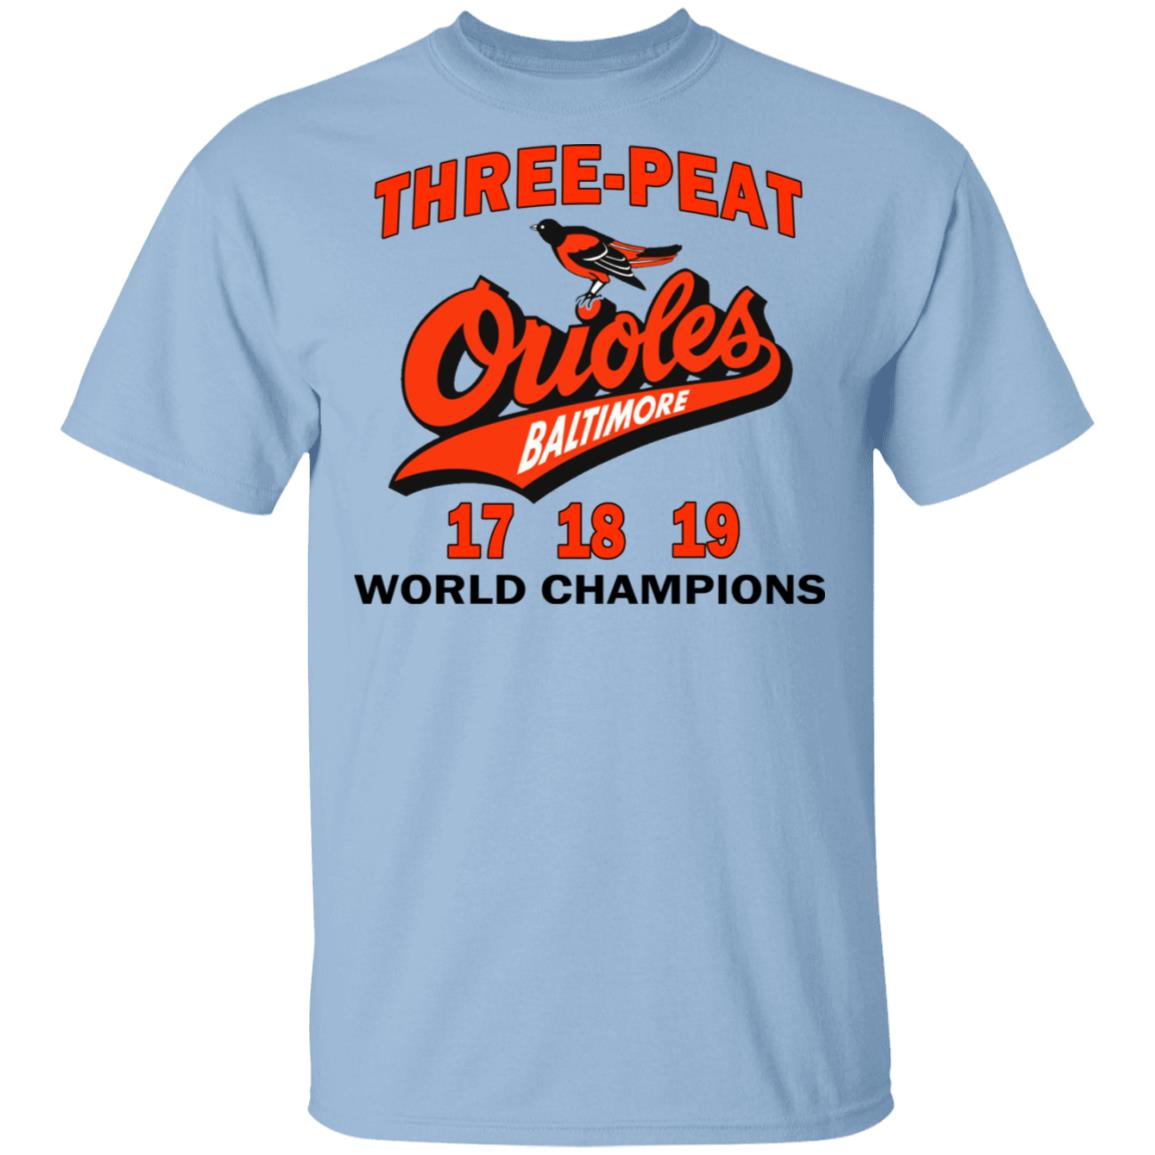 Believe in 3 Peat' Men's T-Shirt